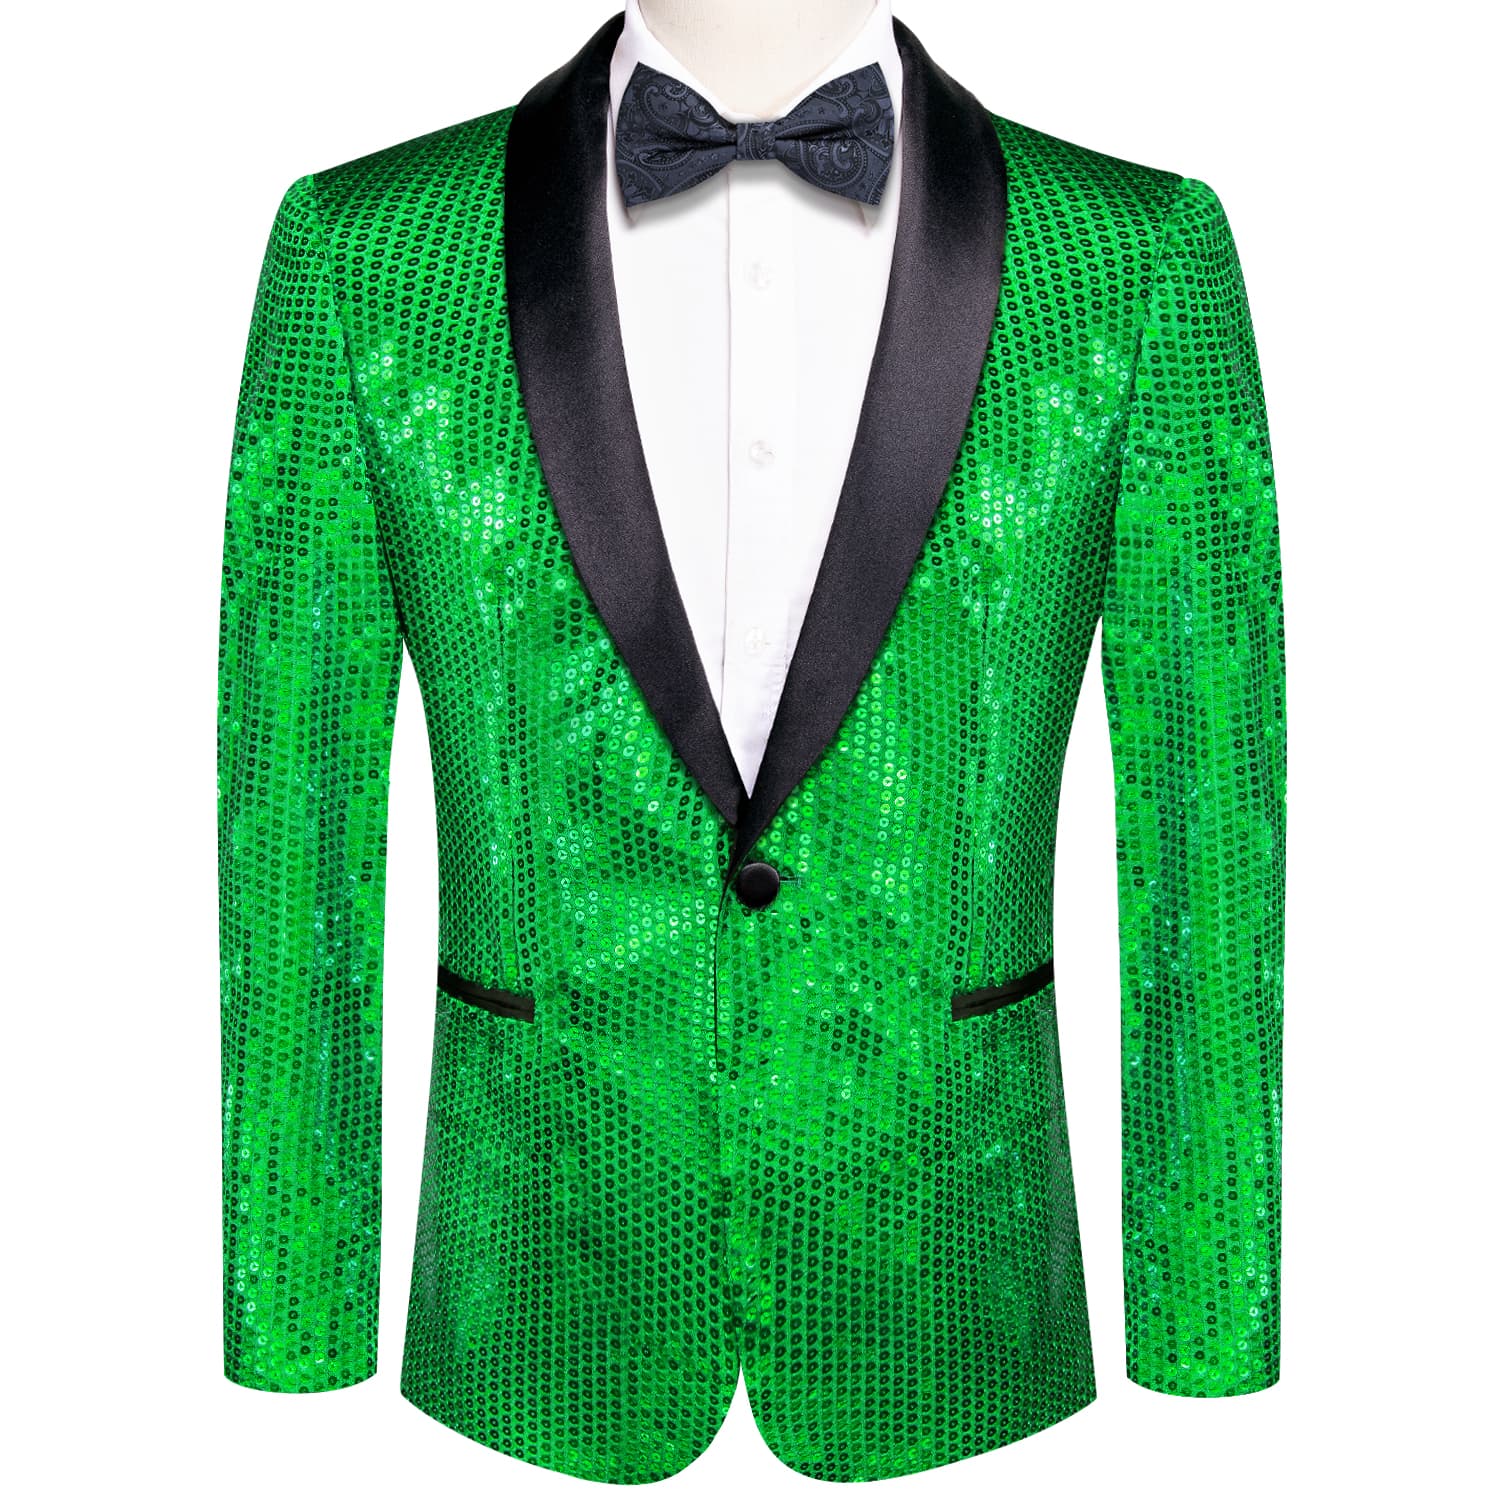 Sequin Blazer Black mens Shawl Collar Green Solid Suit Tie Set